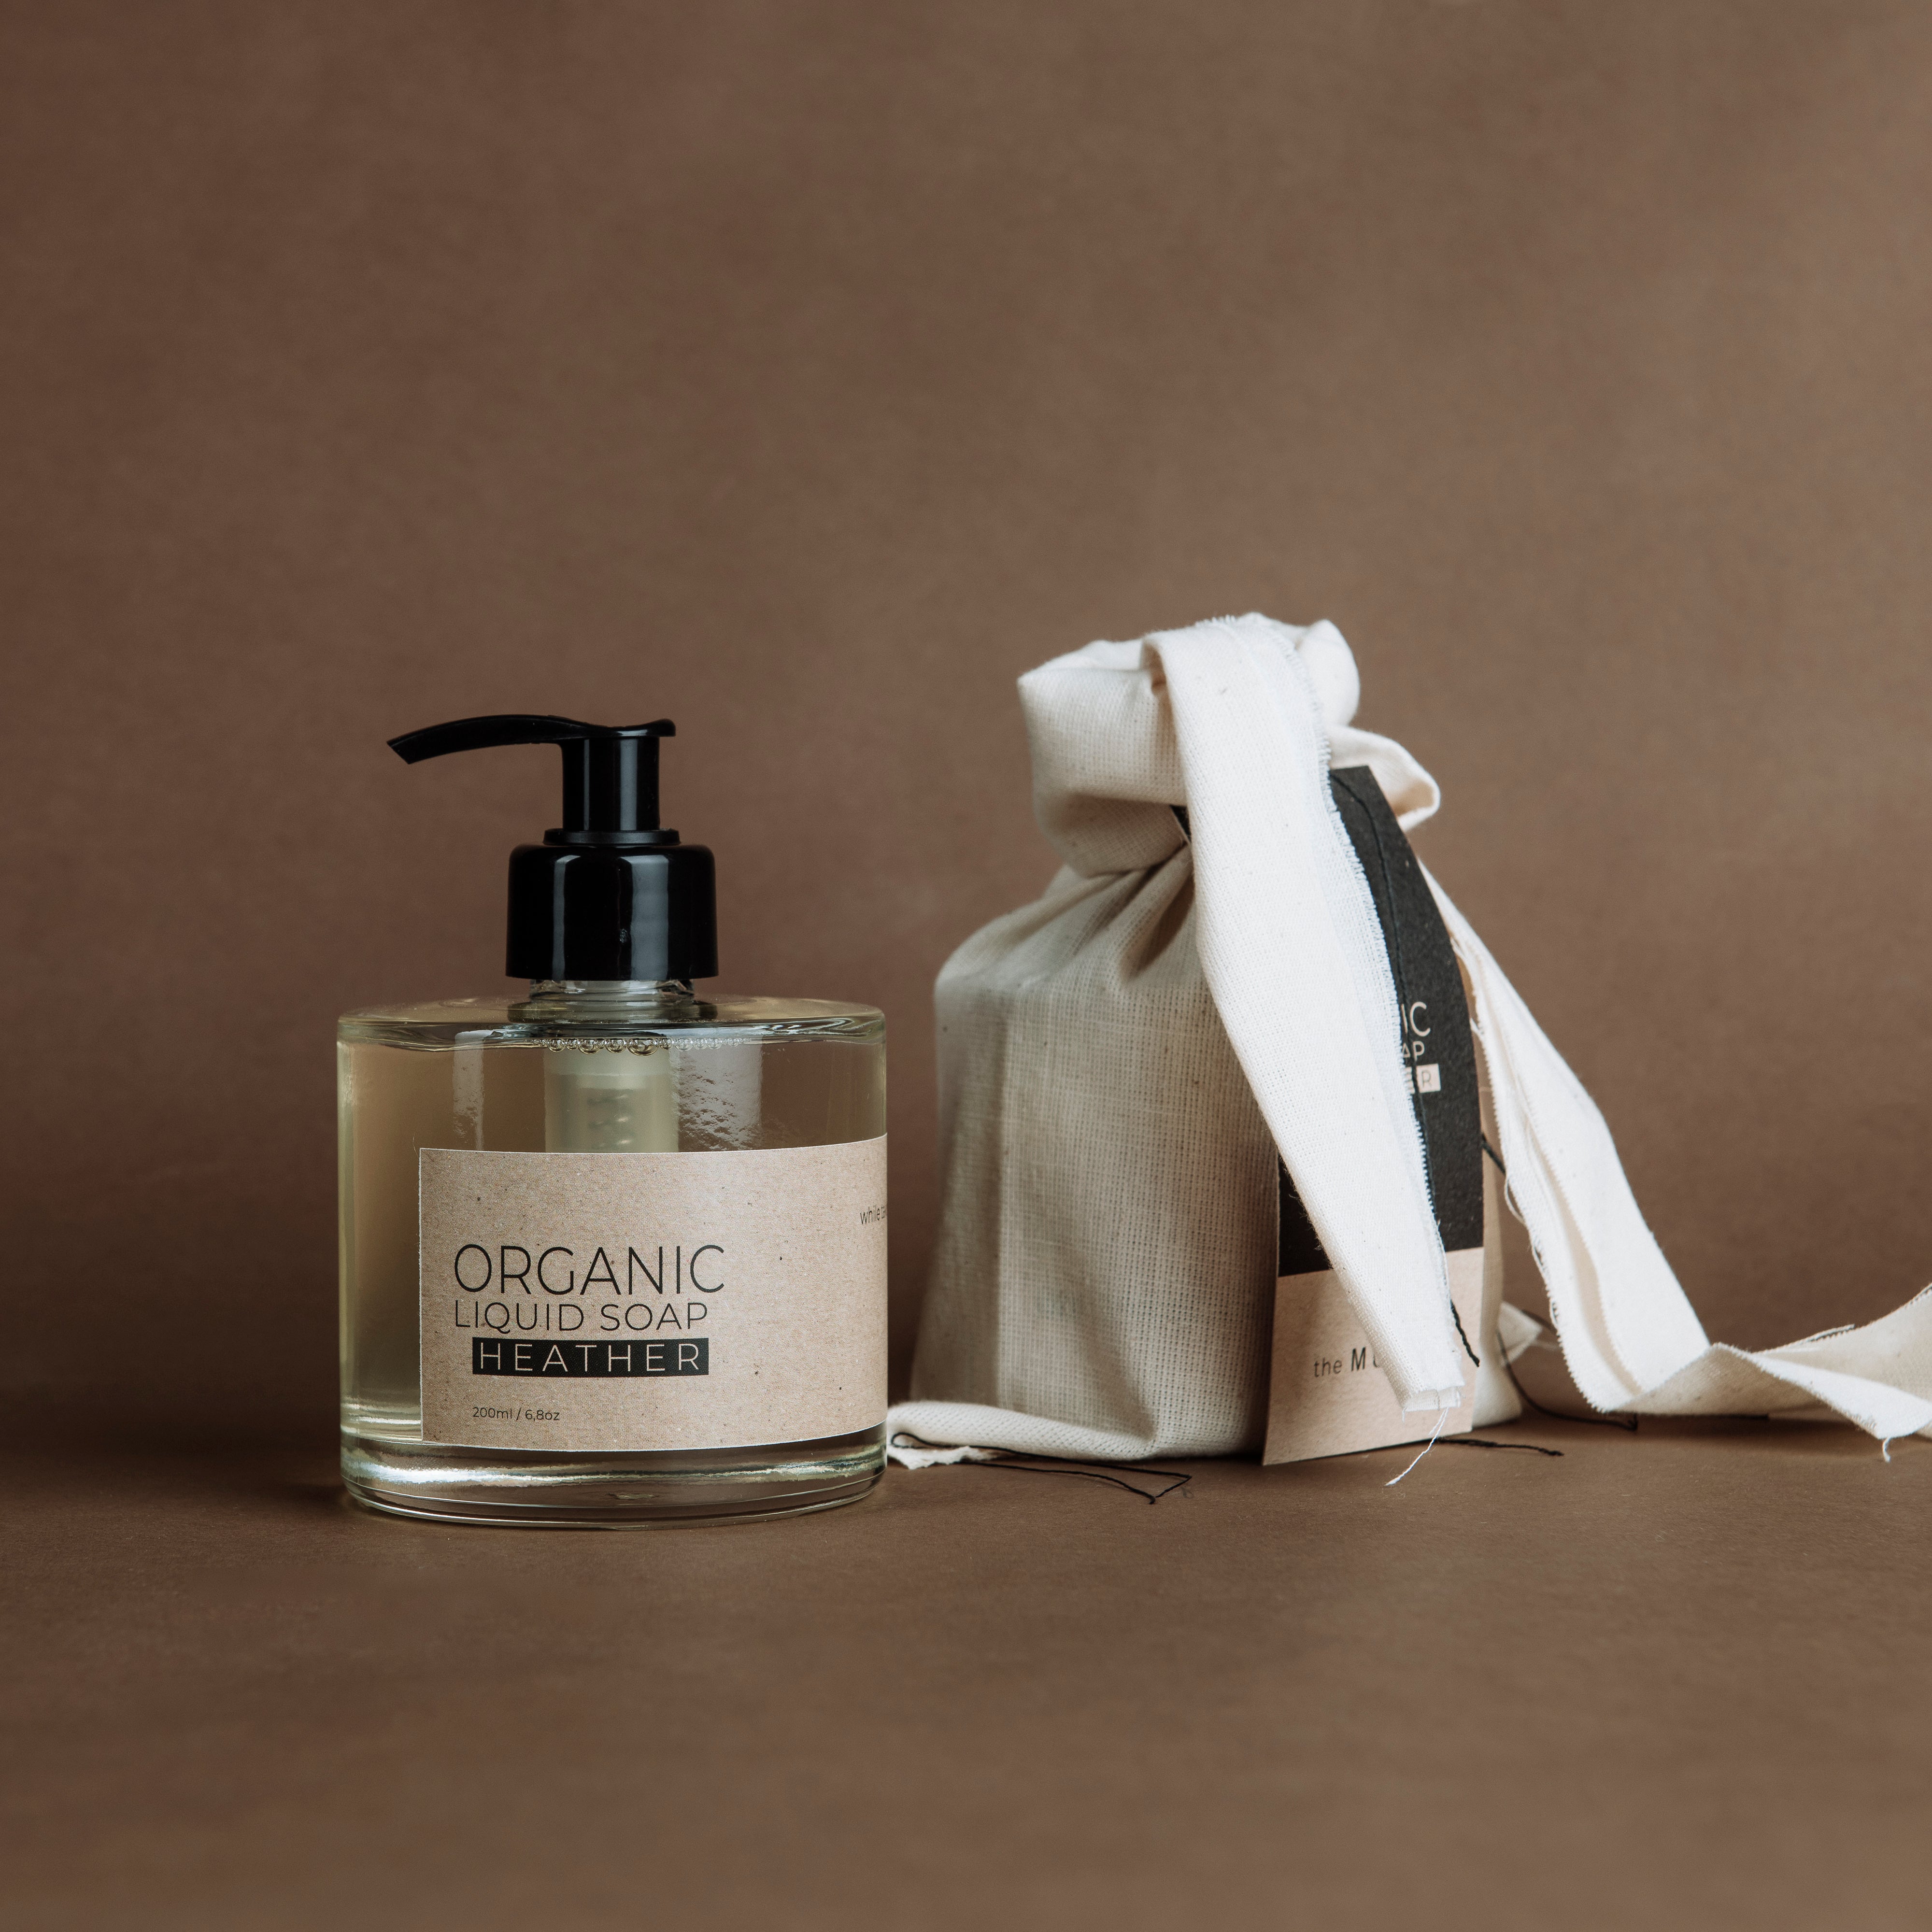 ORANGE BLOSSOM LIQUID HAND SOAP – The Huntington Store